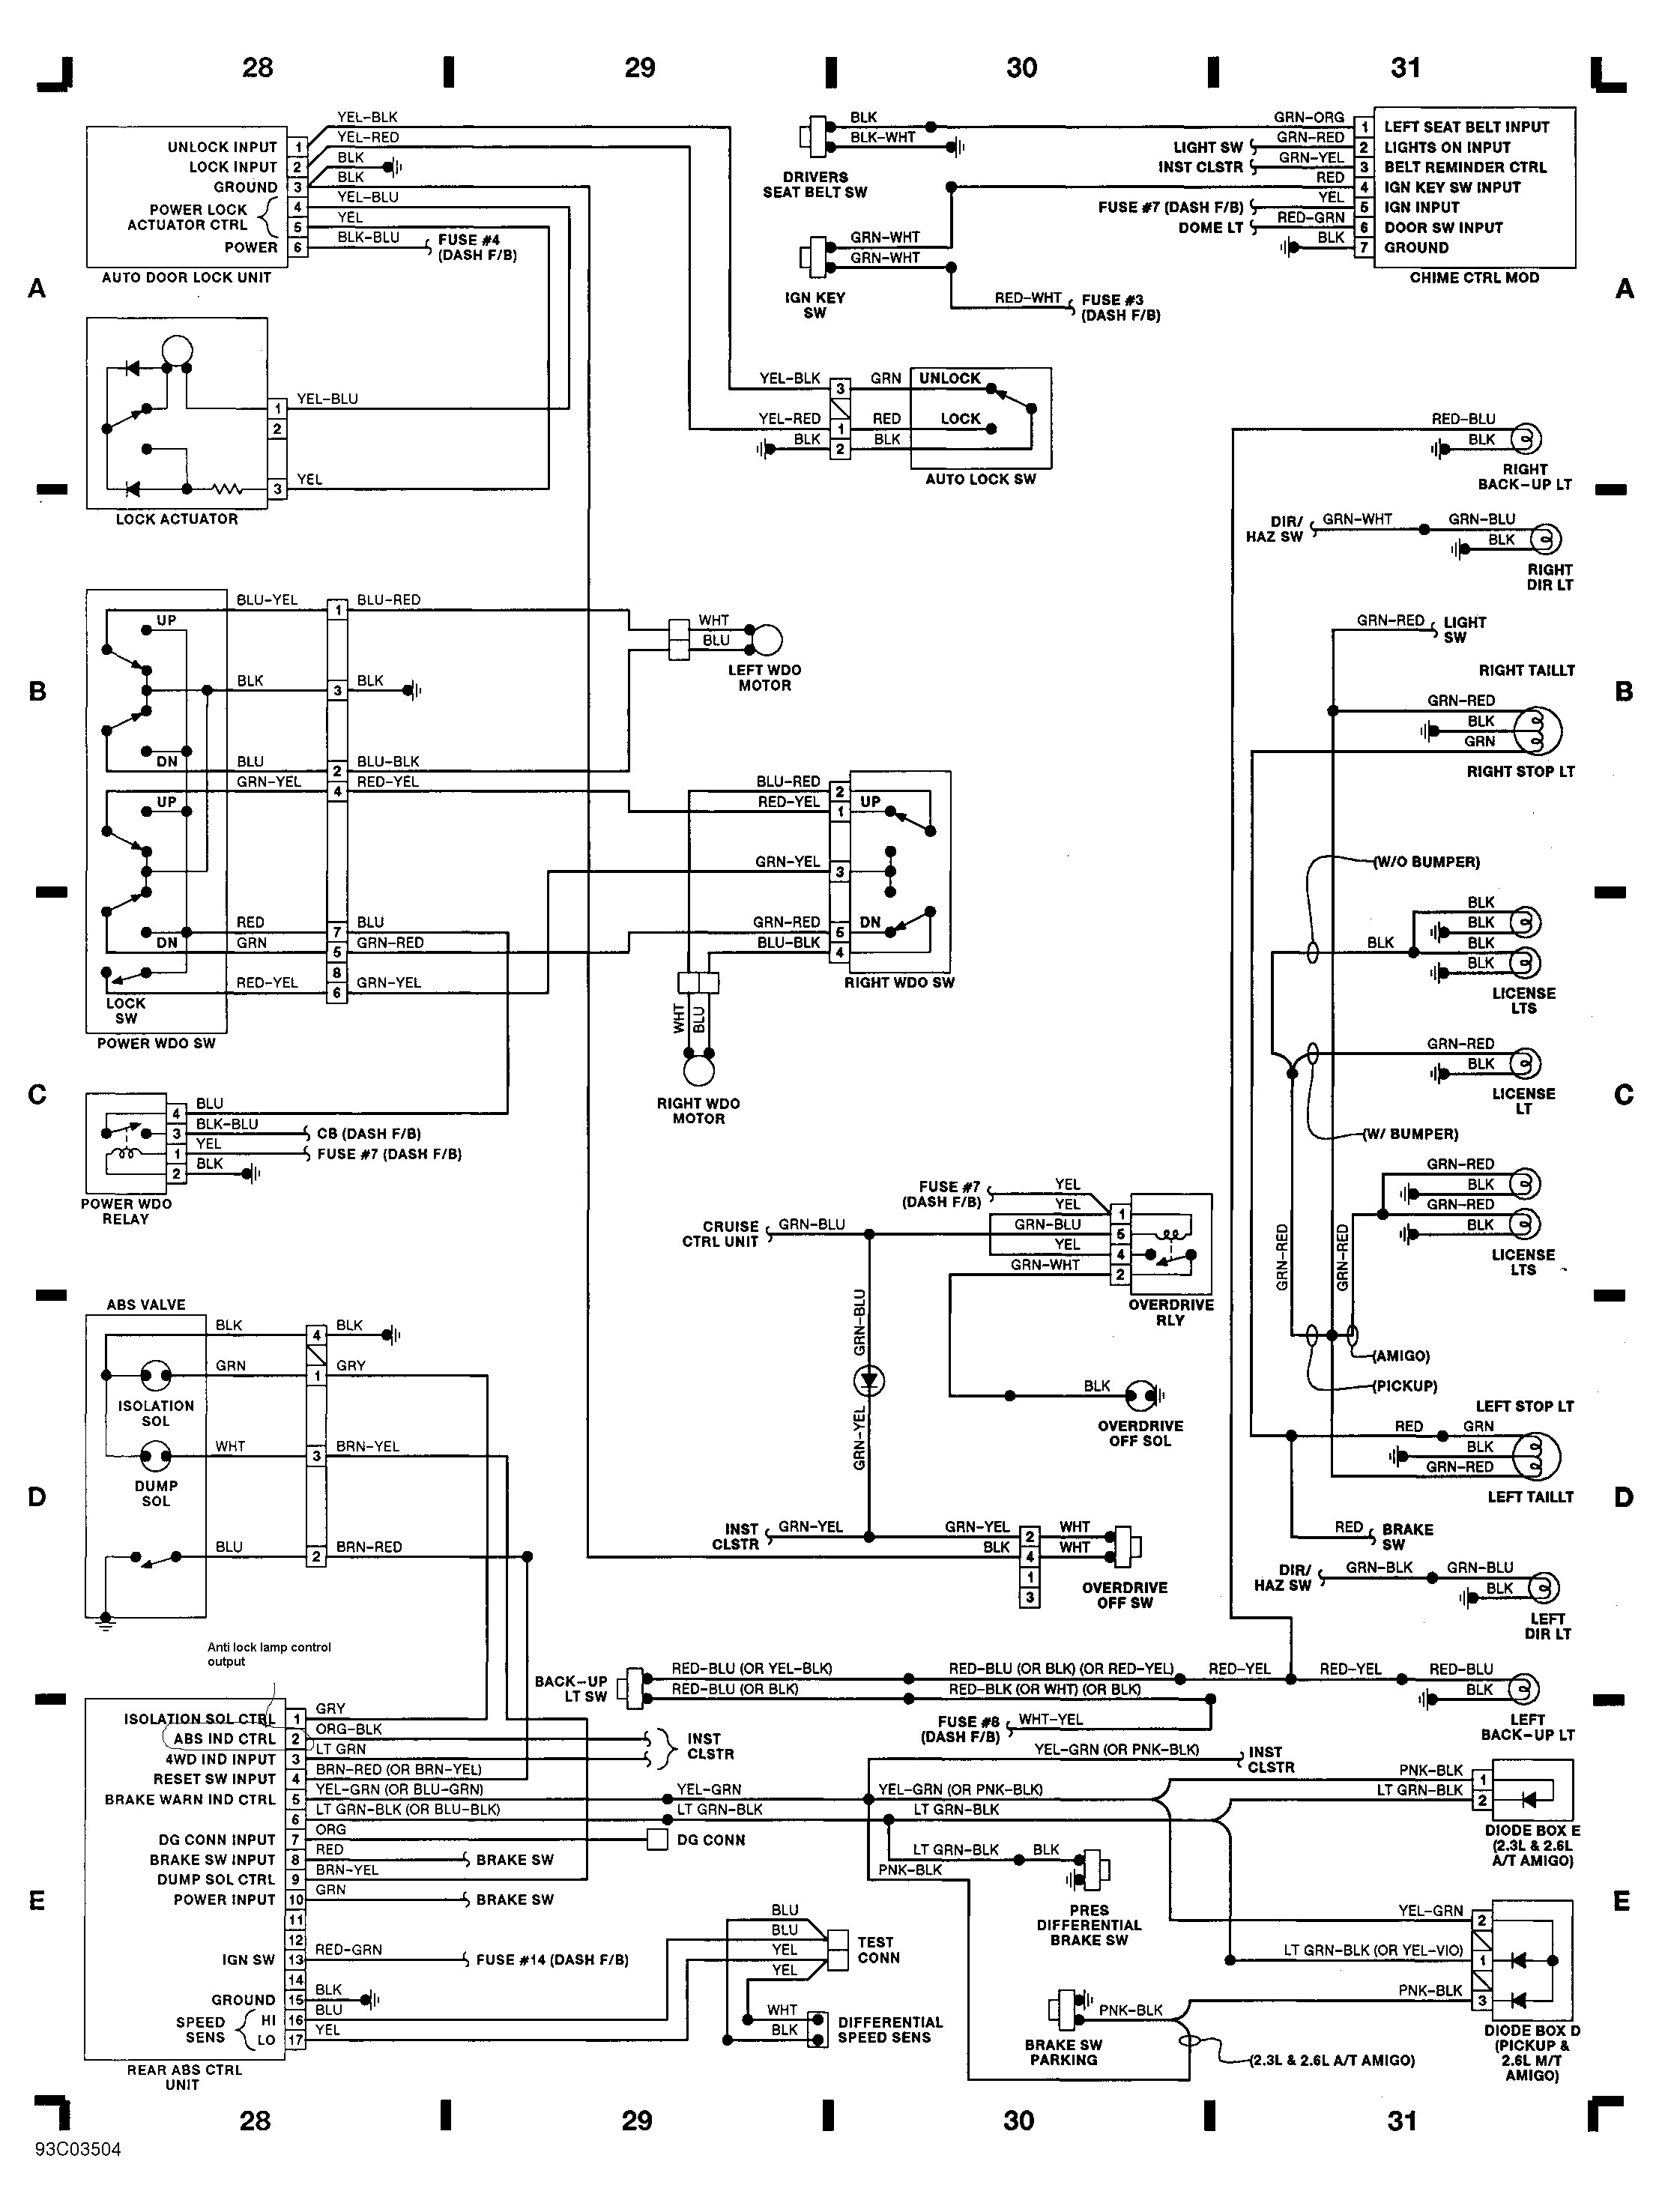 Ford E350 Parts Diagram 9e6000 Simple Car Dashboard Wiring Diagram Of Ford E350 Parts Diagram